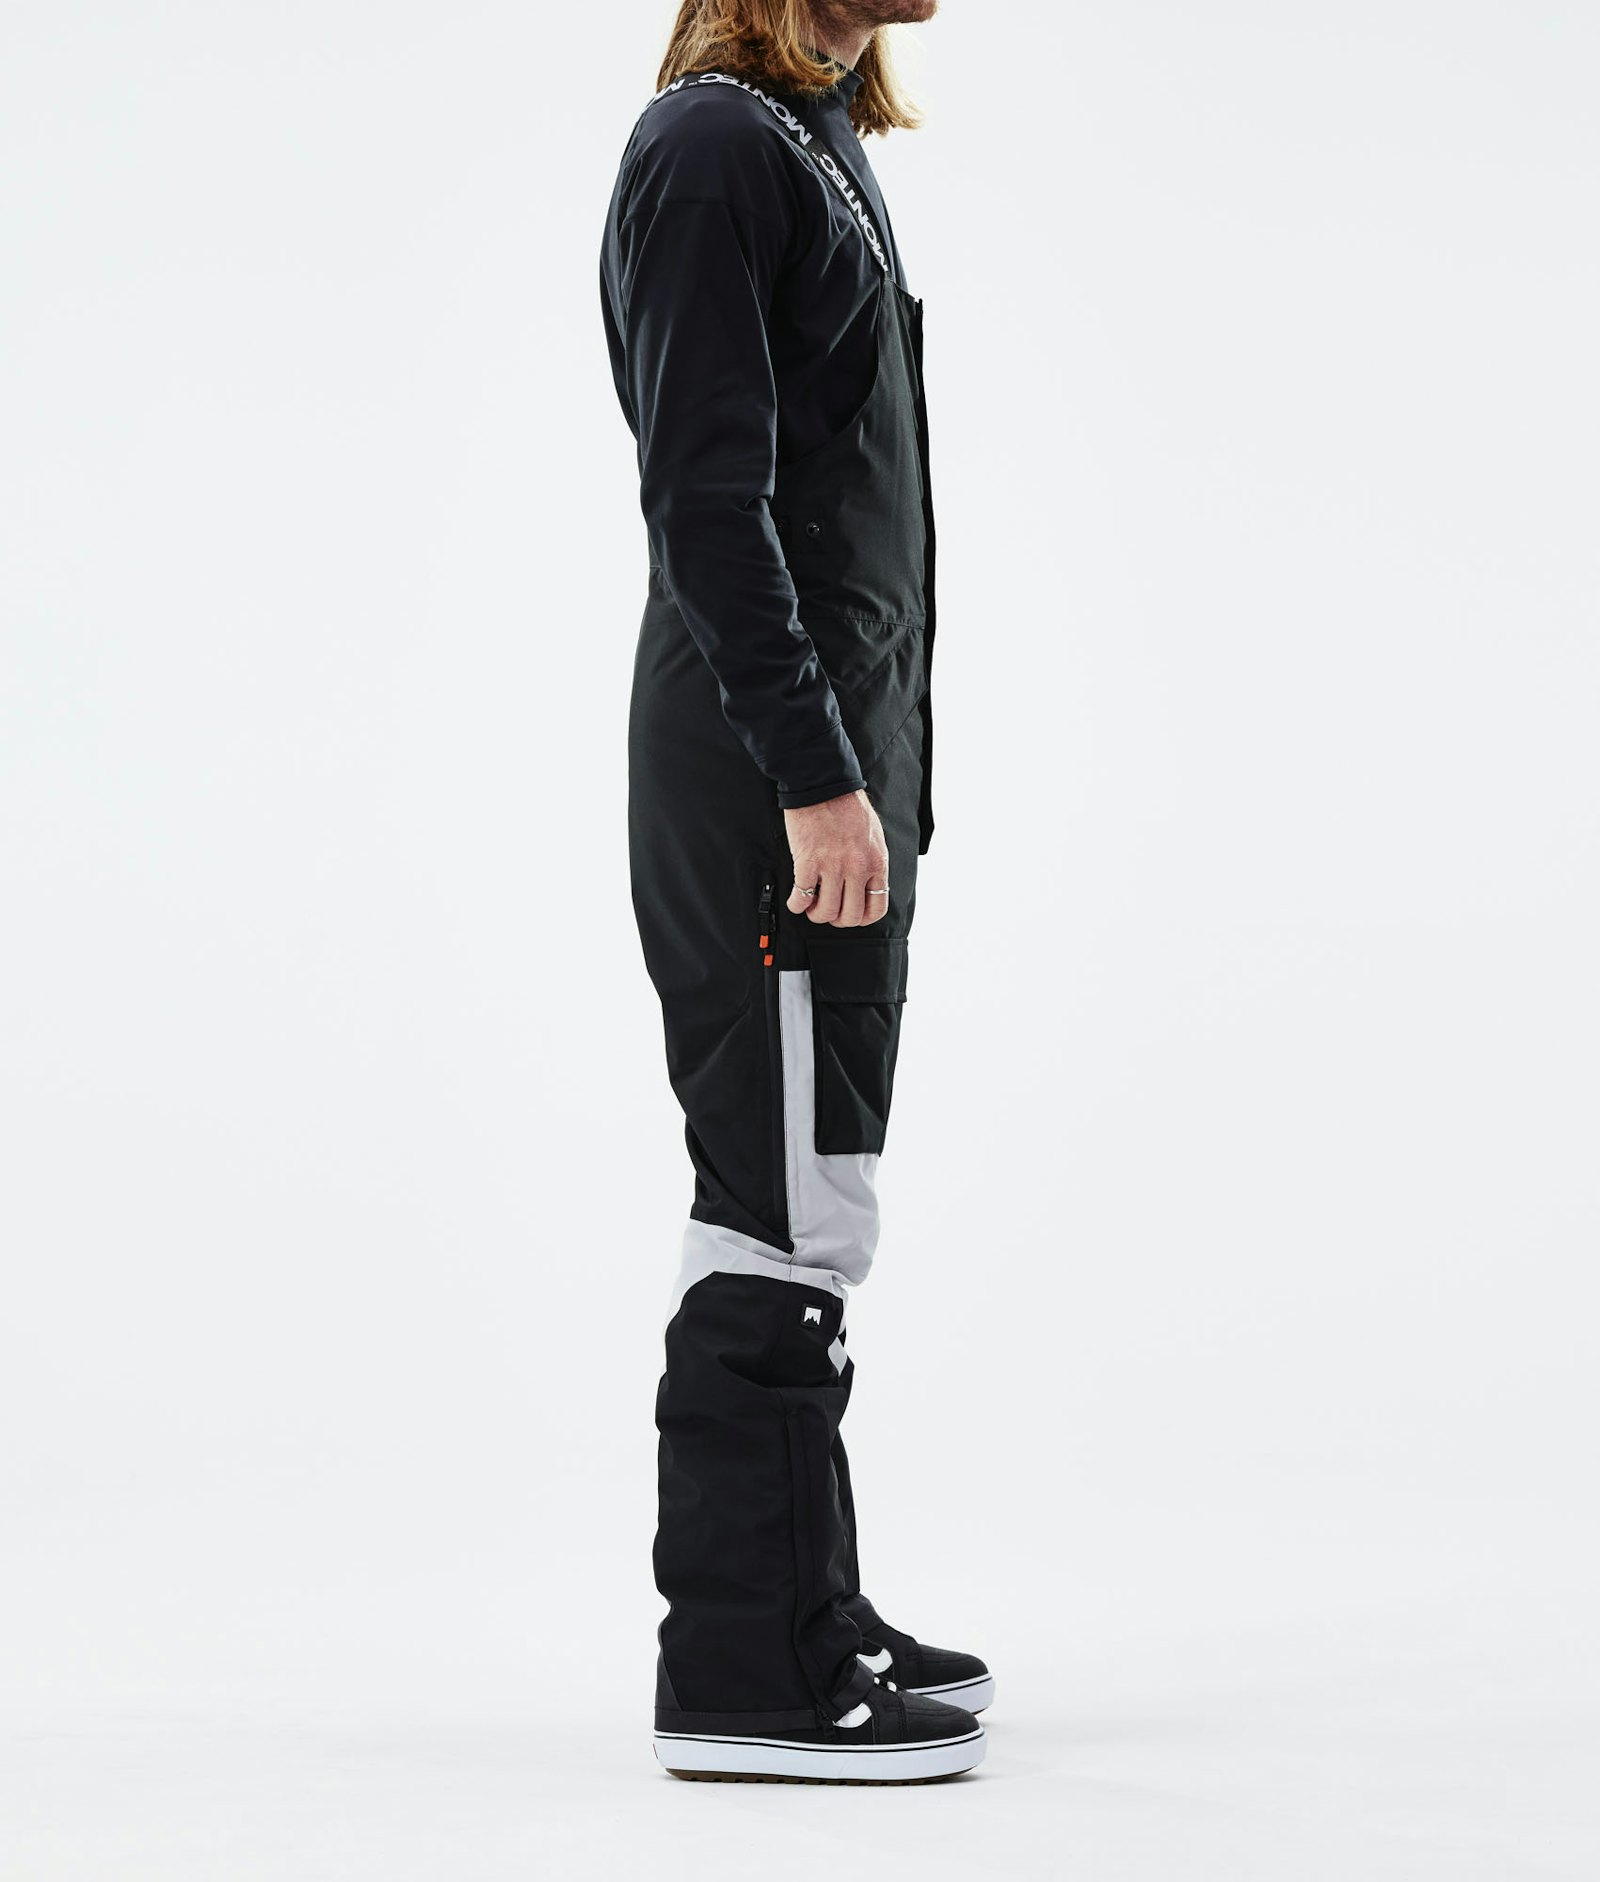 Fawk 2021 Pantalon de Snowboard Homme Black/Light Grey/Black Renewed